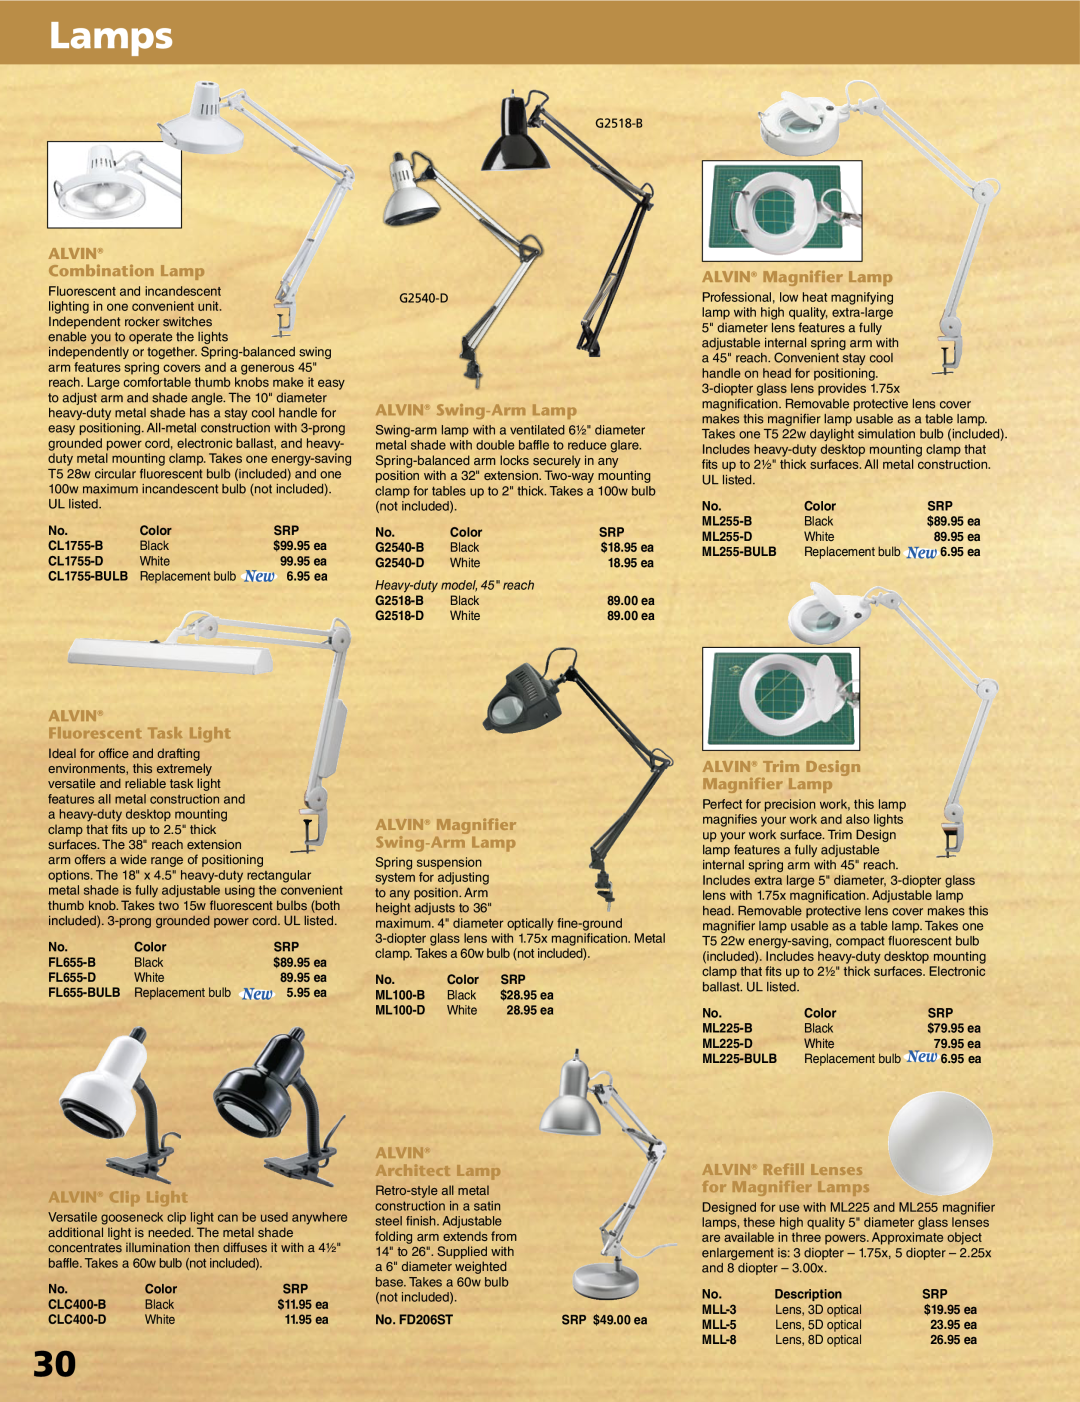 Alvin XX-3-XB manual Lamps, ALVIN Combination Lamp, ALVIN Swing-ArmLamp, ALVIN Magnifier Lamp, ALVIN Fluorescent Task Light 